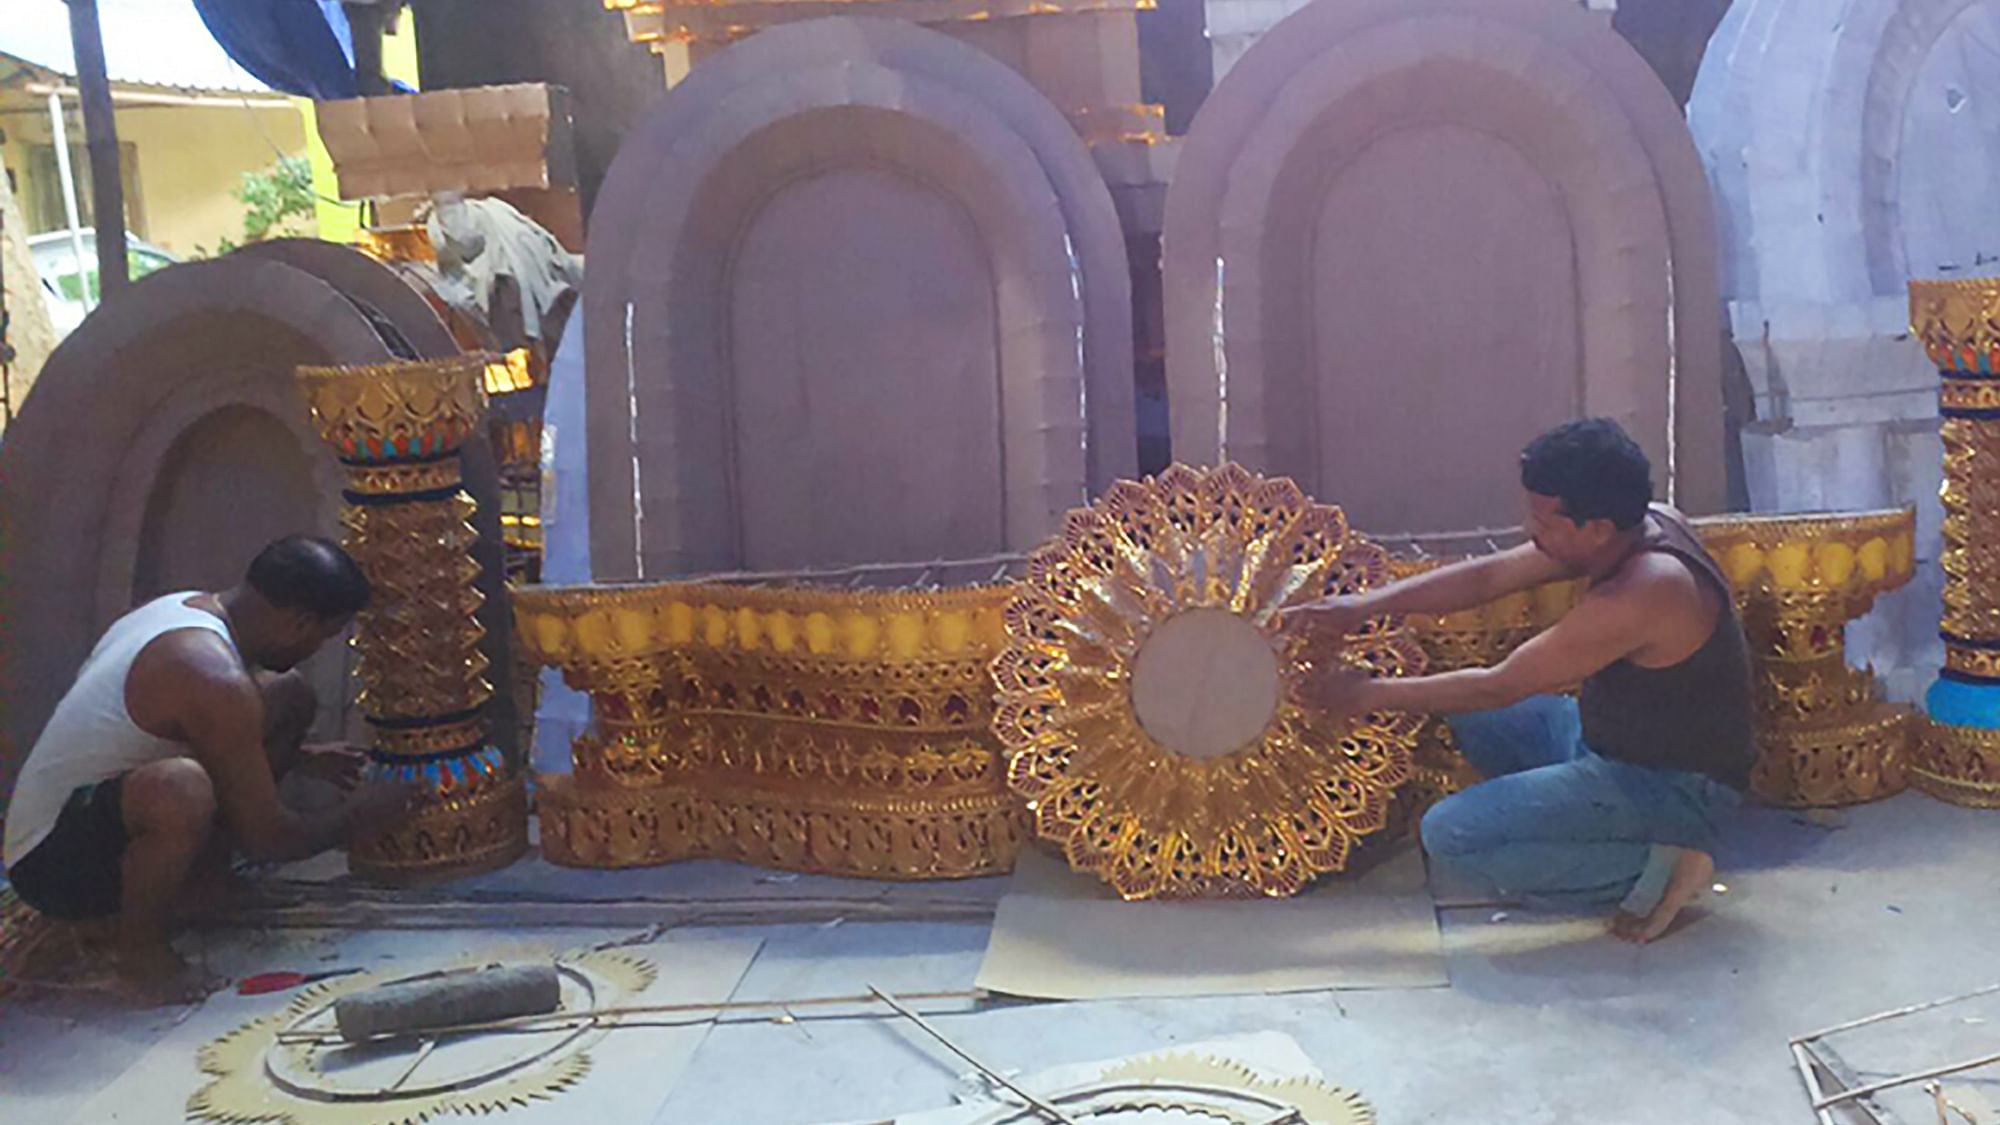 Artisans fixing tableaux with decorative pieces for Durga Puja. (Photo: Bhakta B Rath)